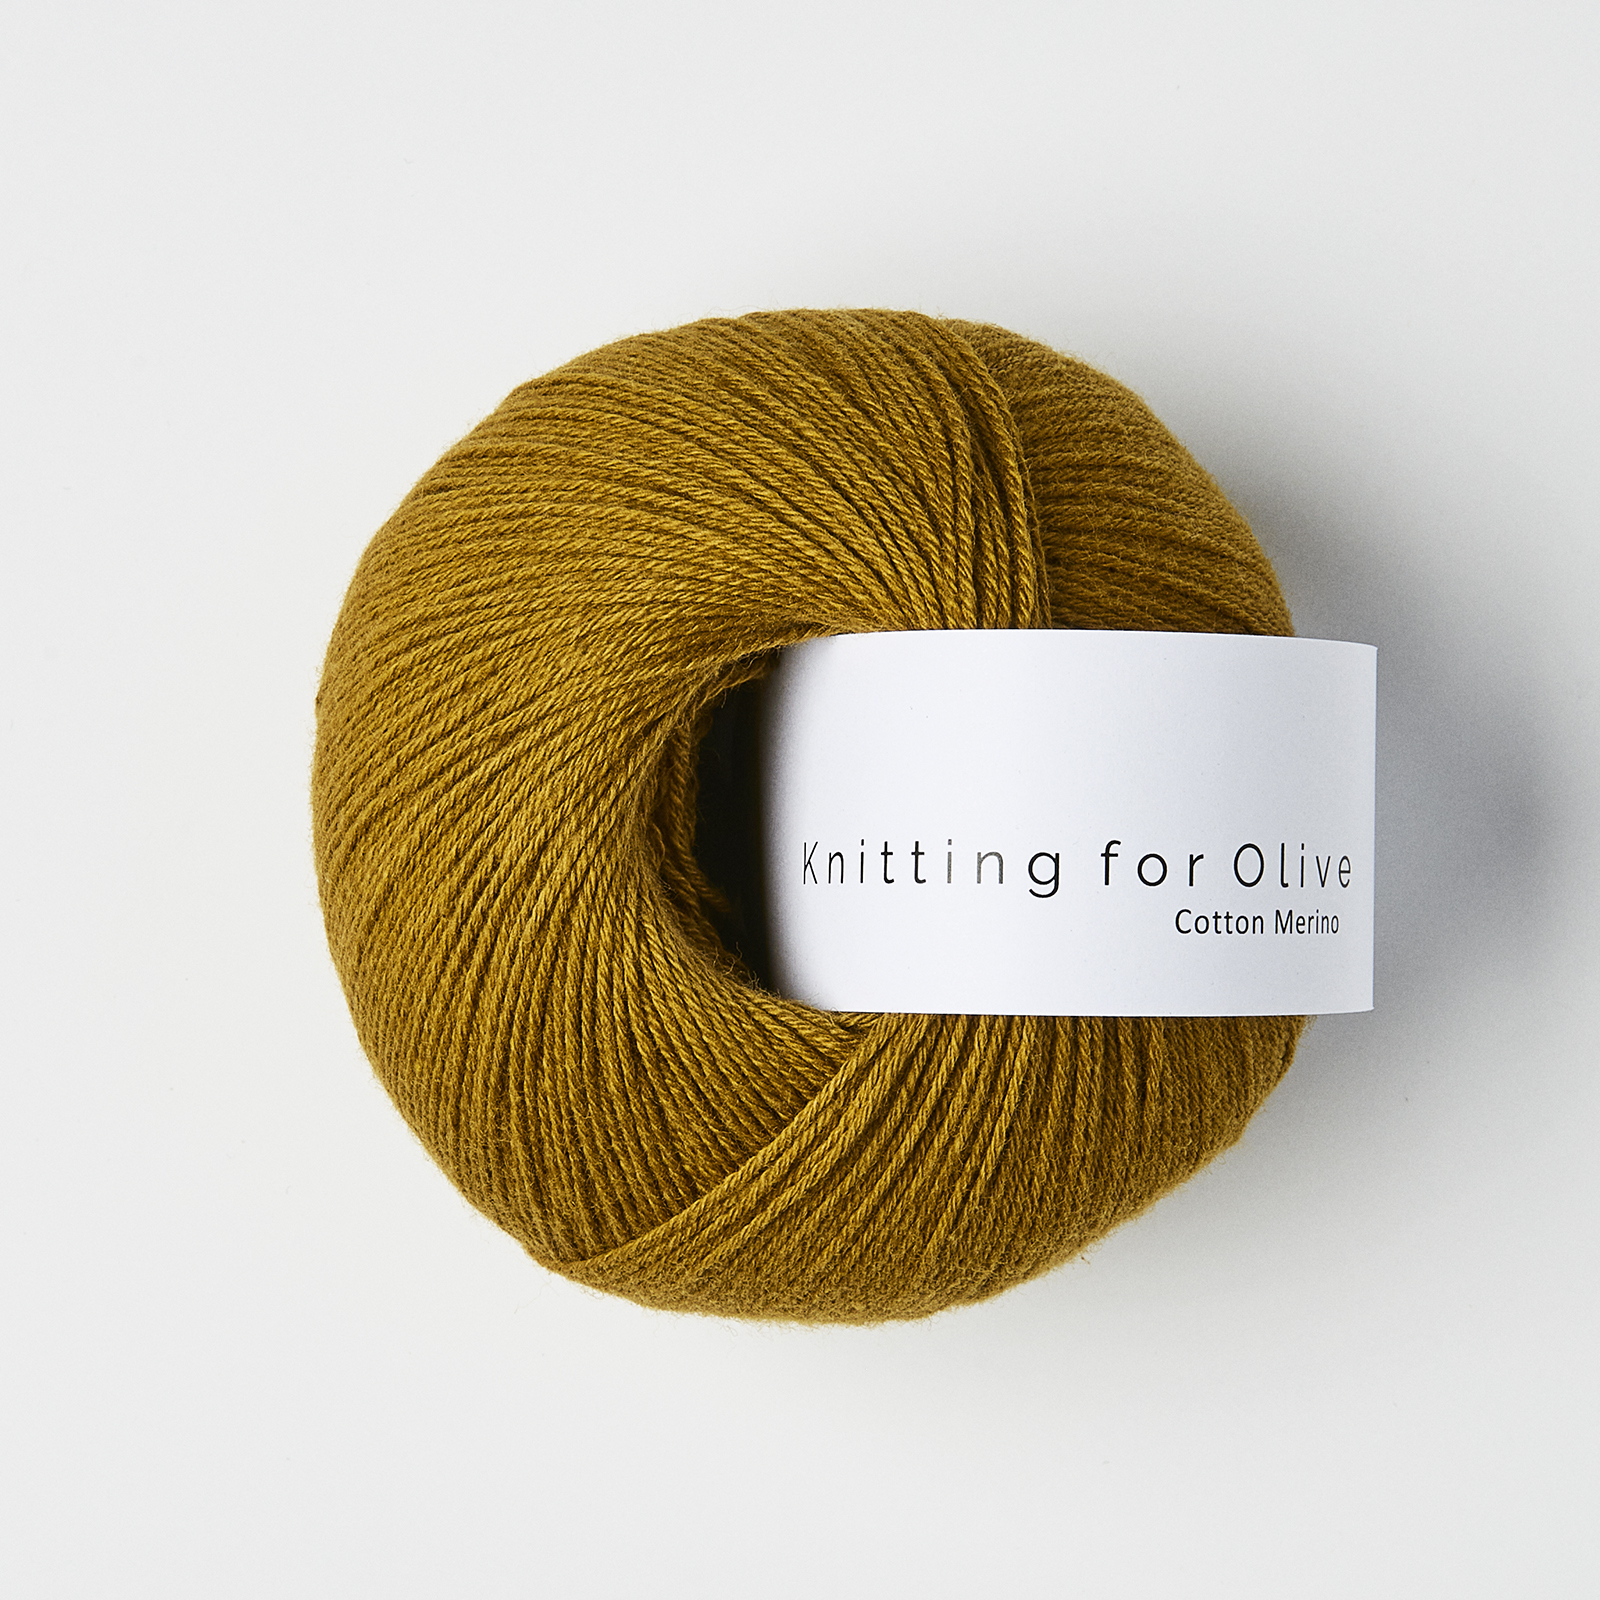 cotton merino knitting for olive | cotton merino: ocher brown